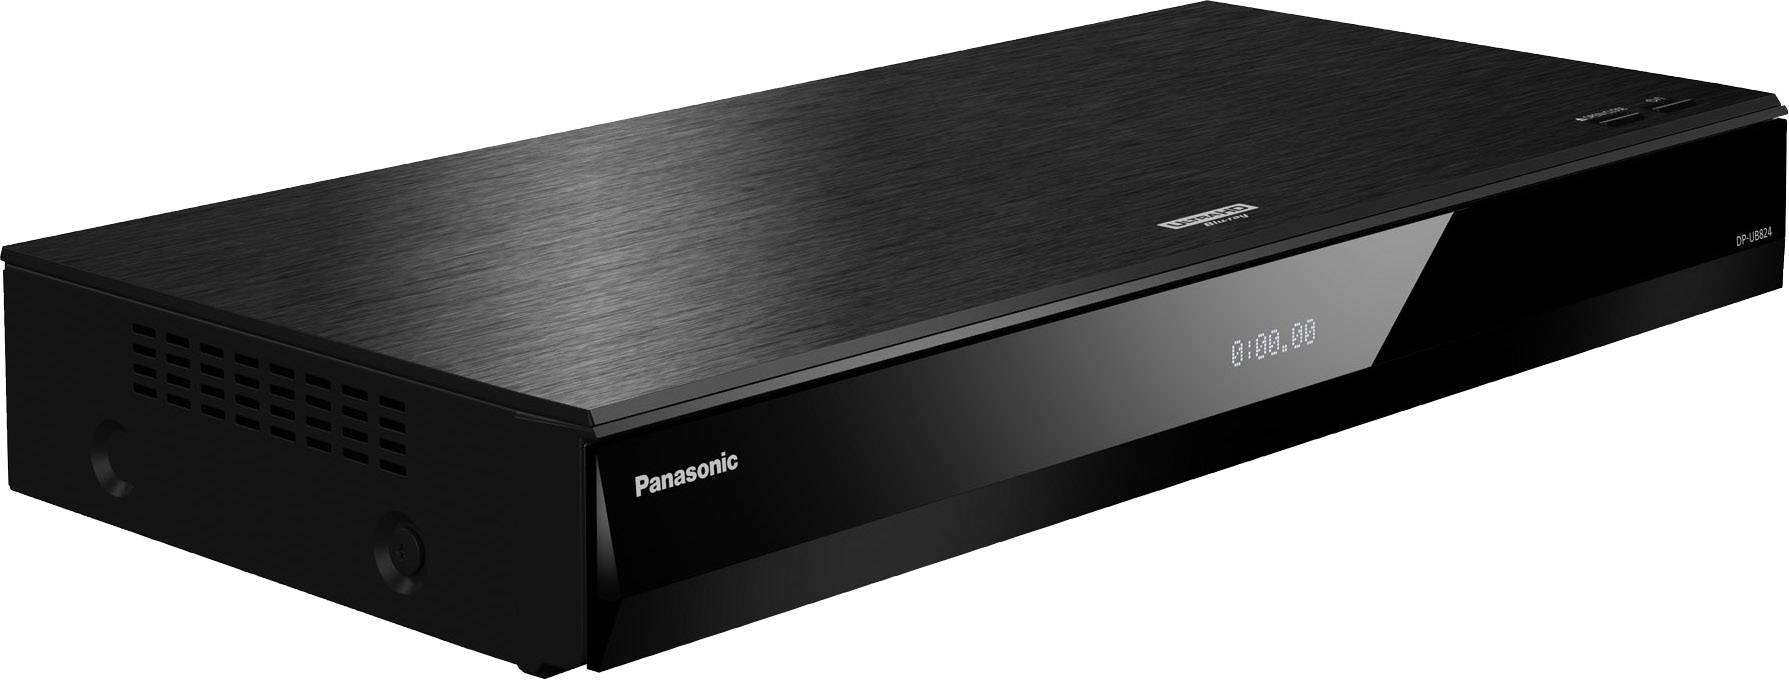 Panasonic Dp Ub824 Lettore Blu Ray Uhd 4k Ultra Hd Wlan Smart Tv Supporta Amazon Alexa